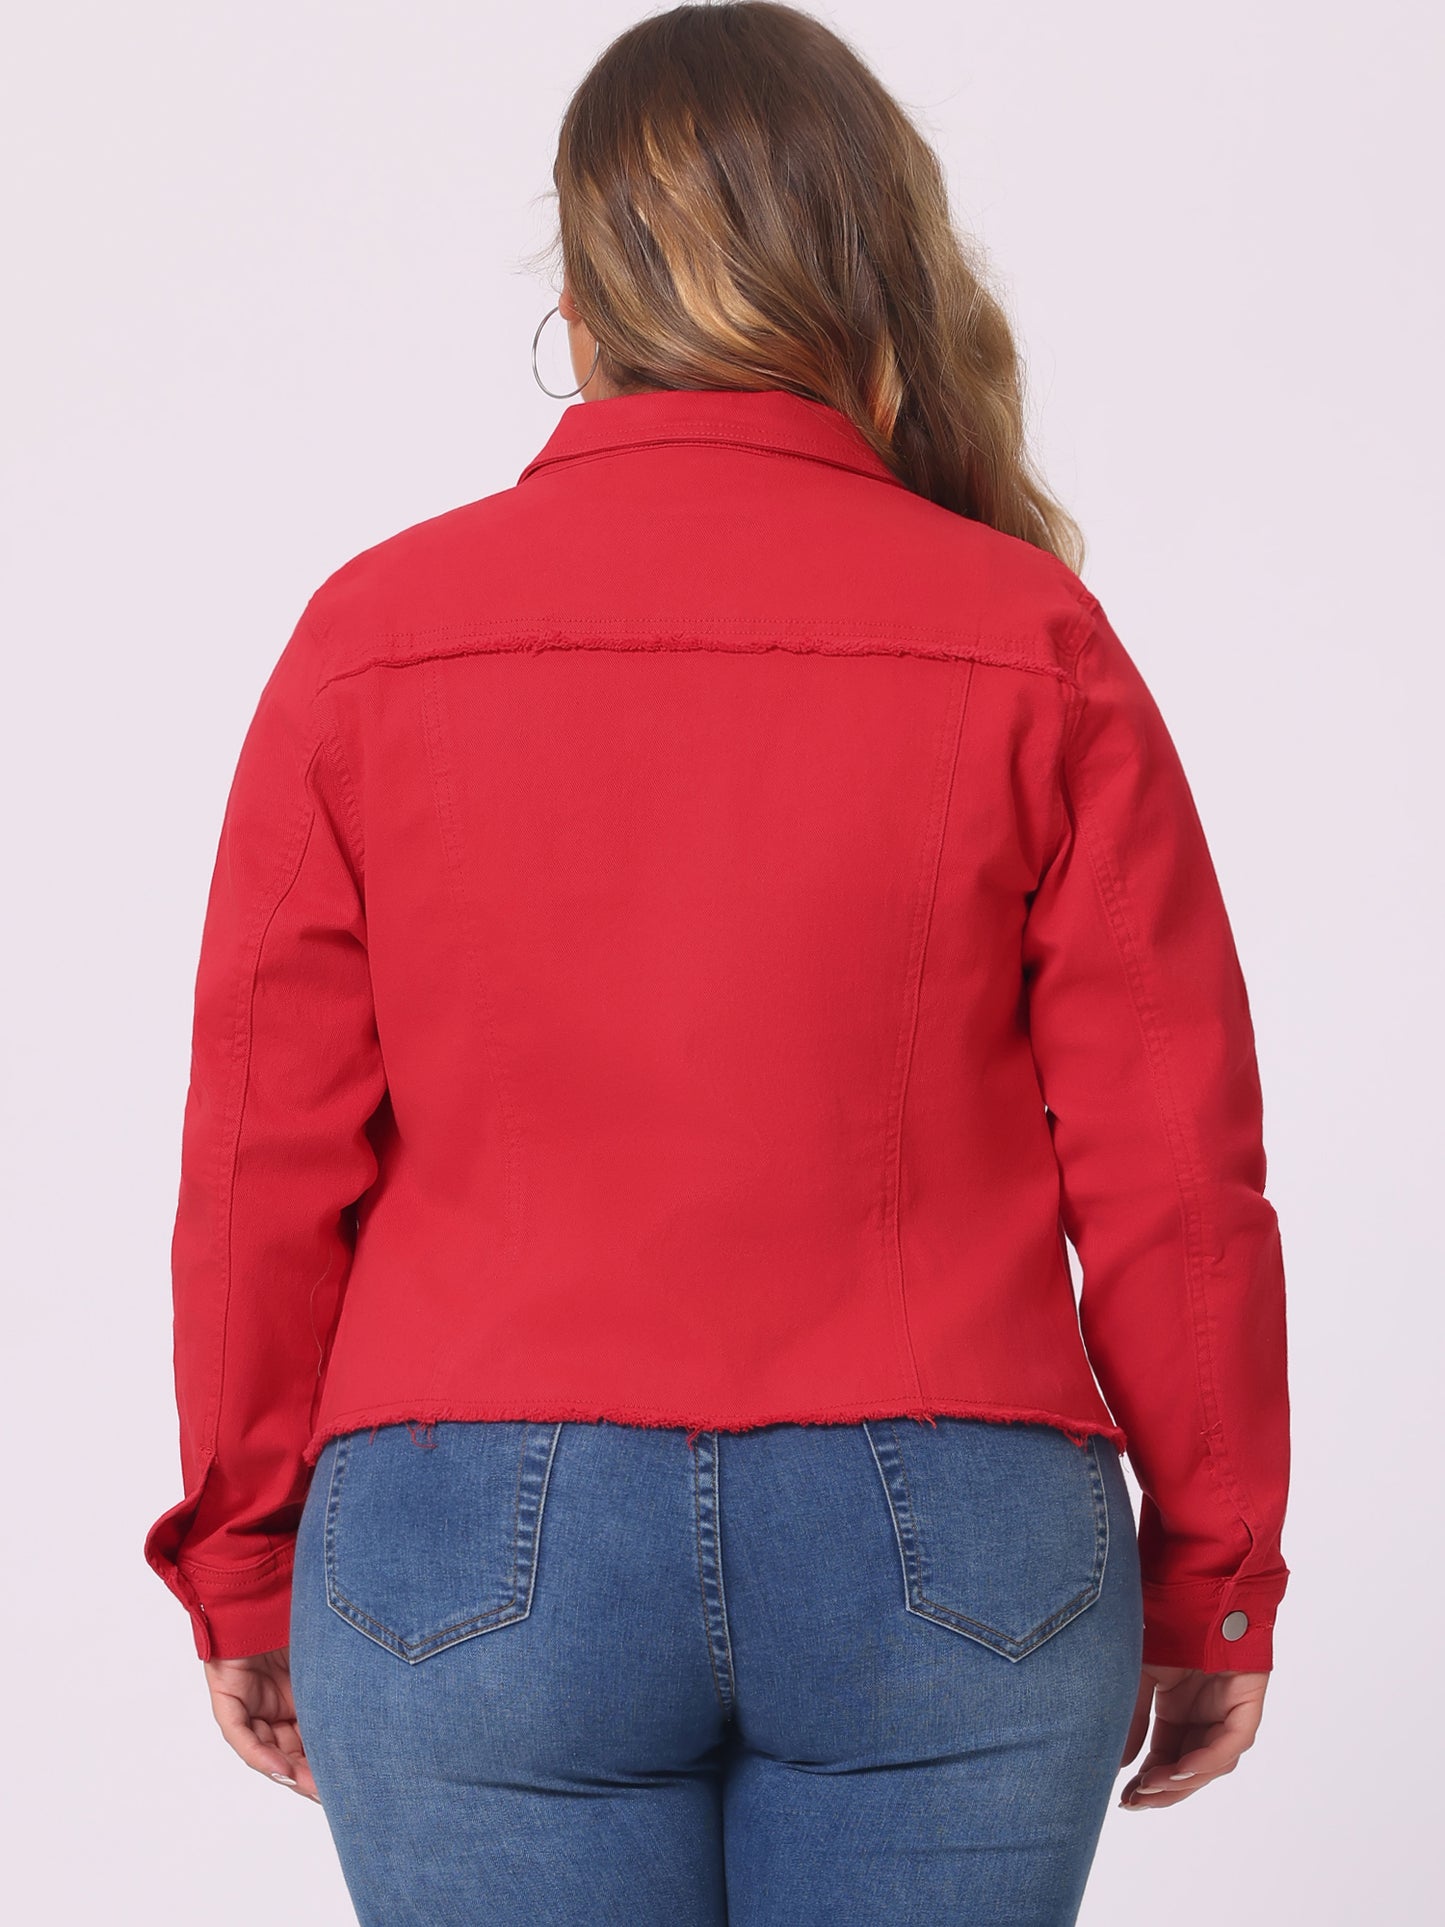 Agnes Orinda Plus Size Classic Washed Front Frayed Denim Jacket Red